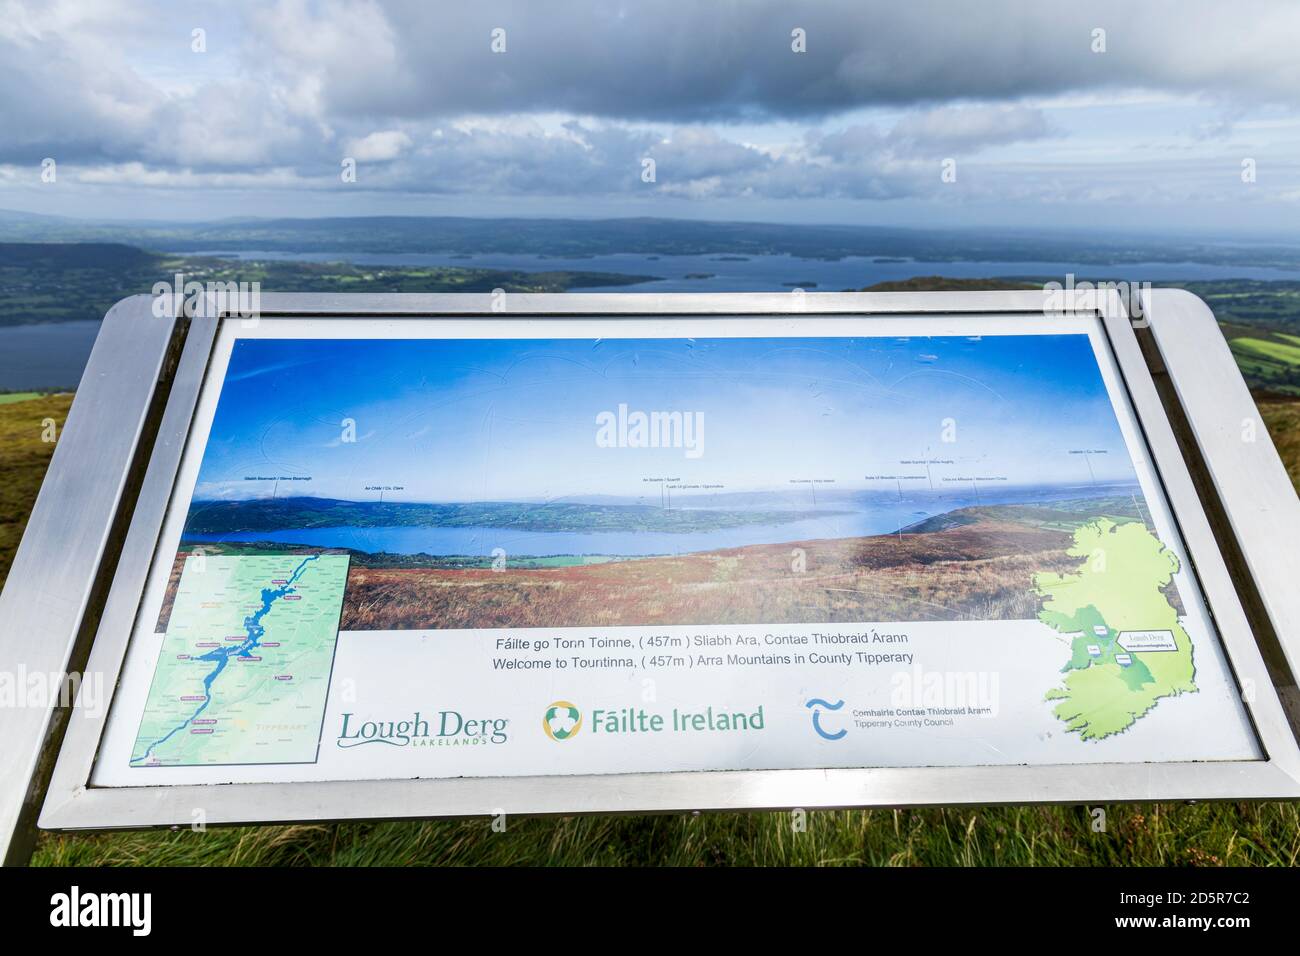 Touristeninformationsschild in Tountinna, Tonn Toinne, in den ARRA Mountains am Lough Derg Way, Grafschaft Tipperary, Irland Stockfoto